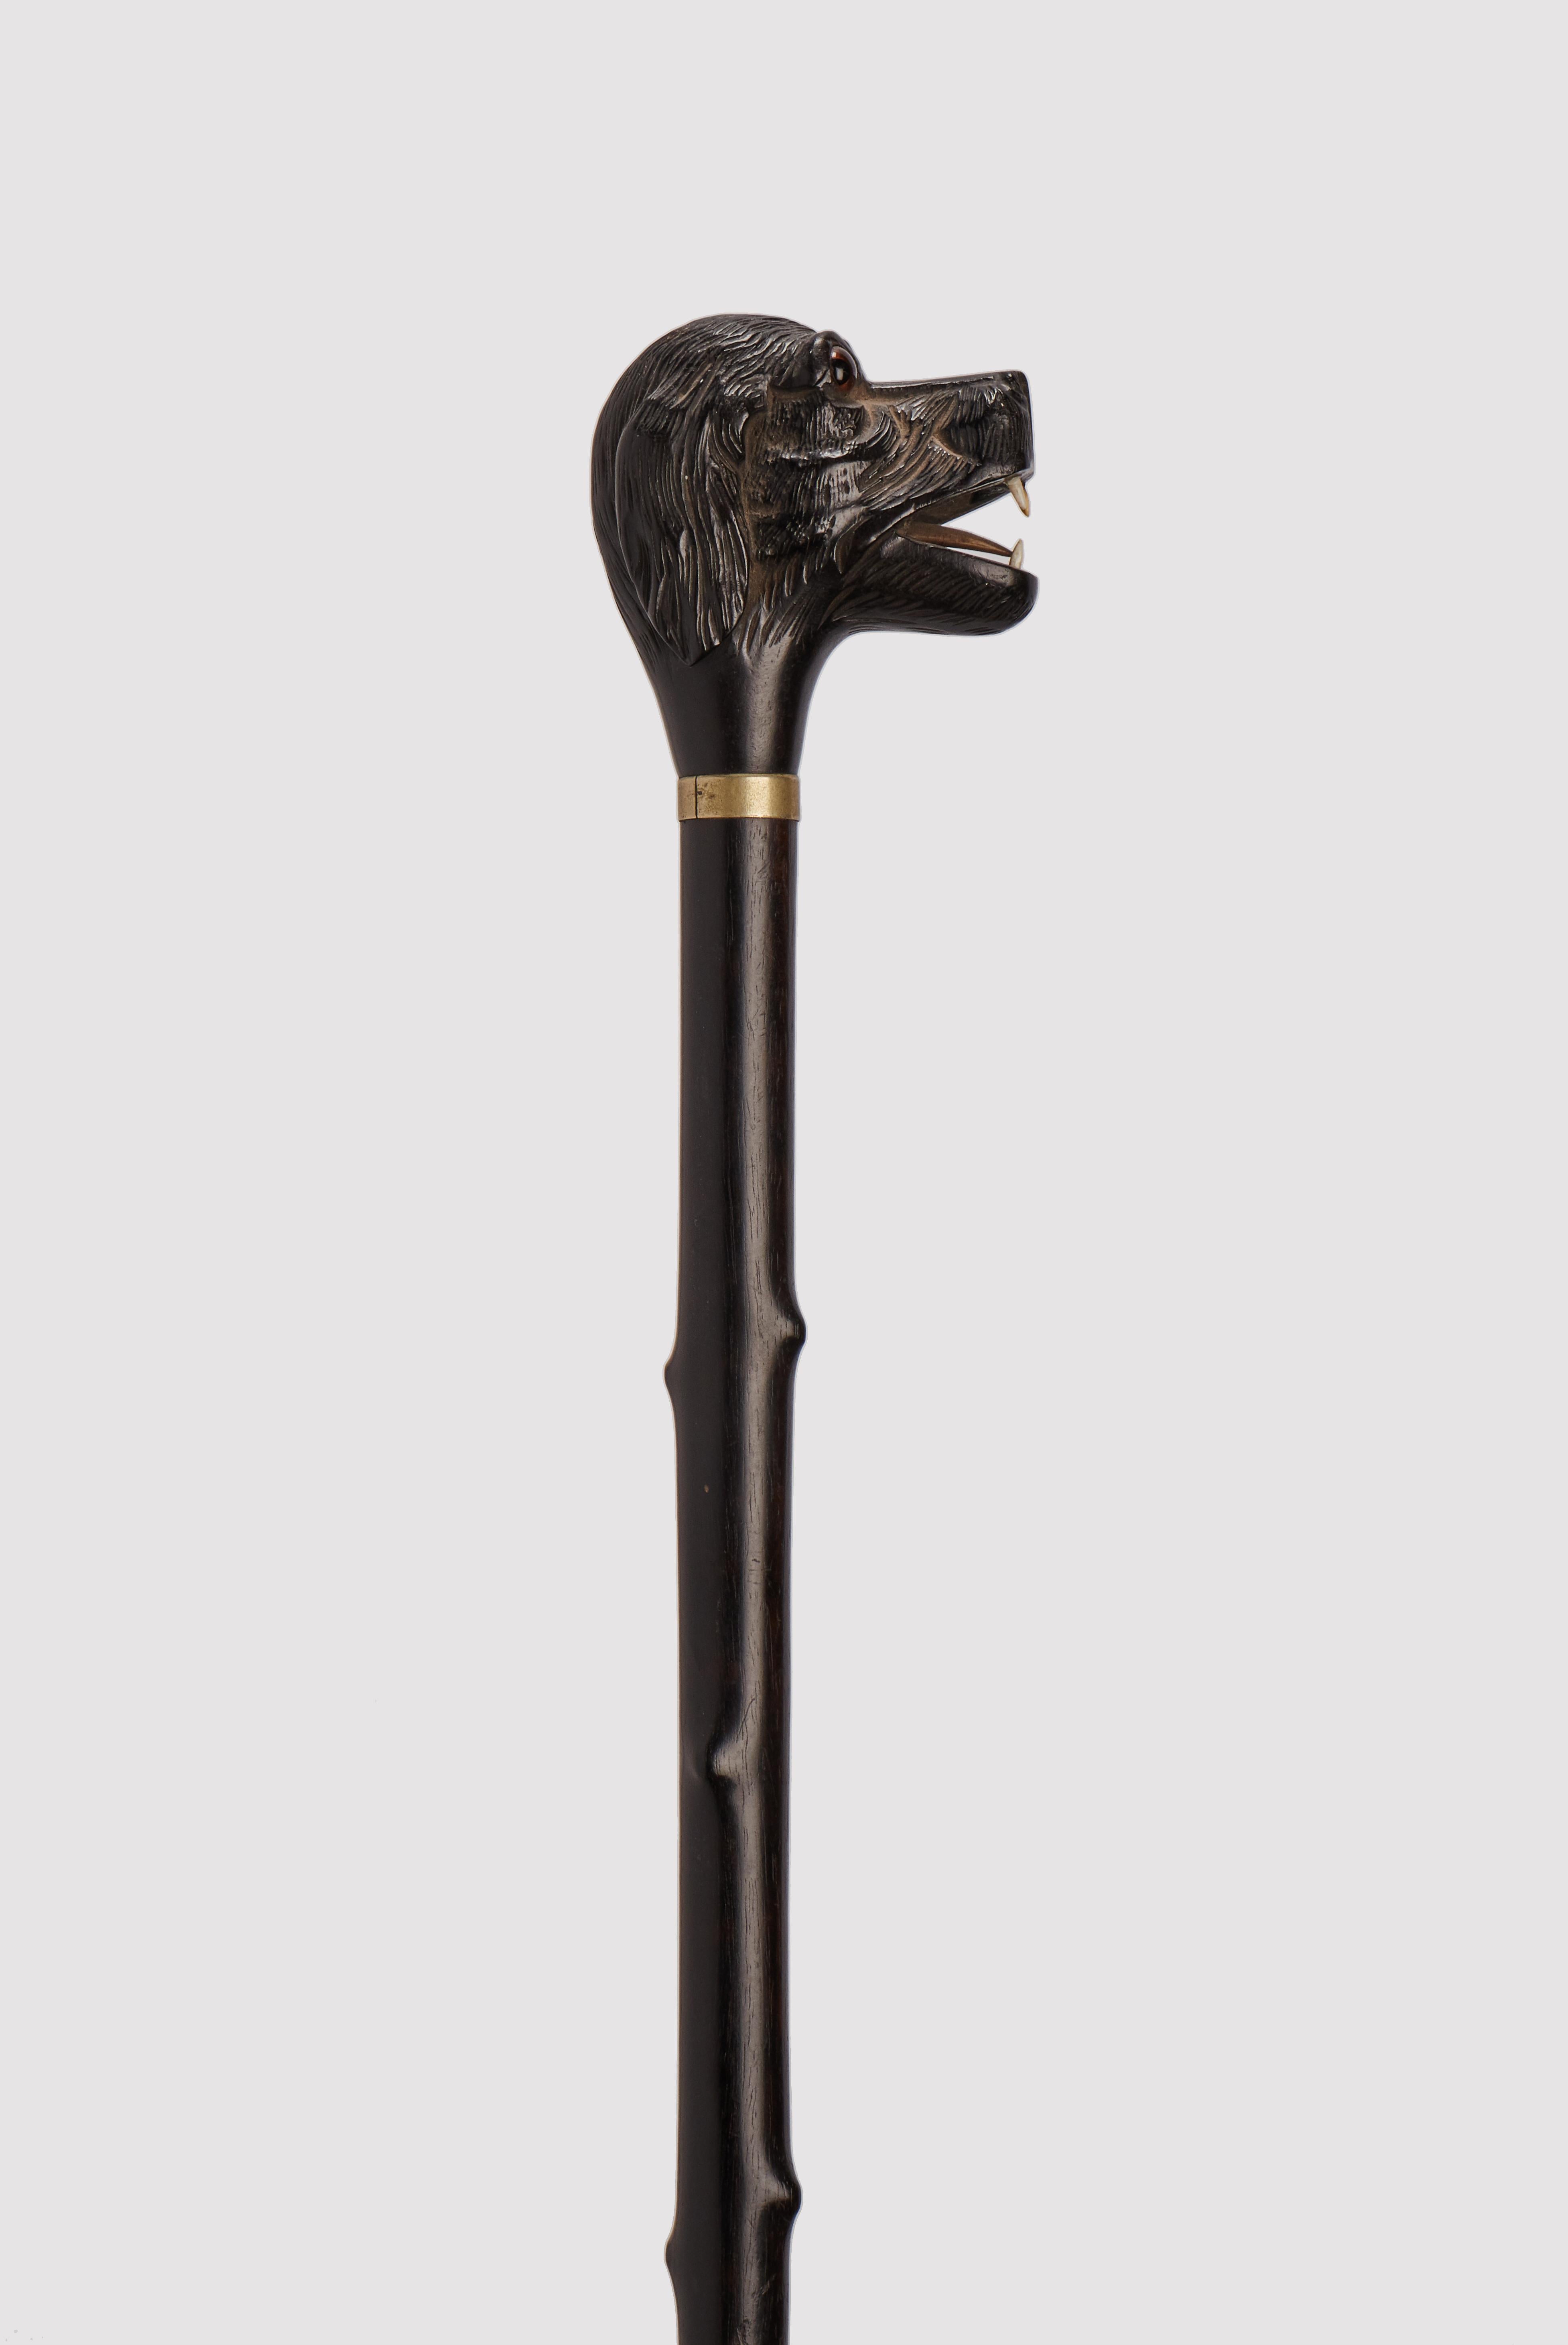 Folk art walking stick: carved wooden handle depicting a dog’s head with a mouth open. Sulphur glass eyes, bones tongue and bones teeth. Ebony wood shaft, Silver ring. Metal ferrule. France 1890 circa.